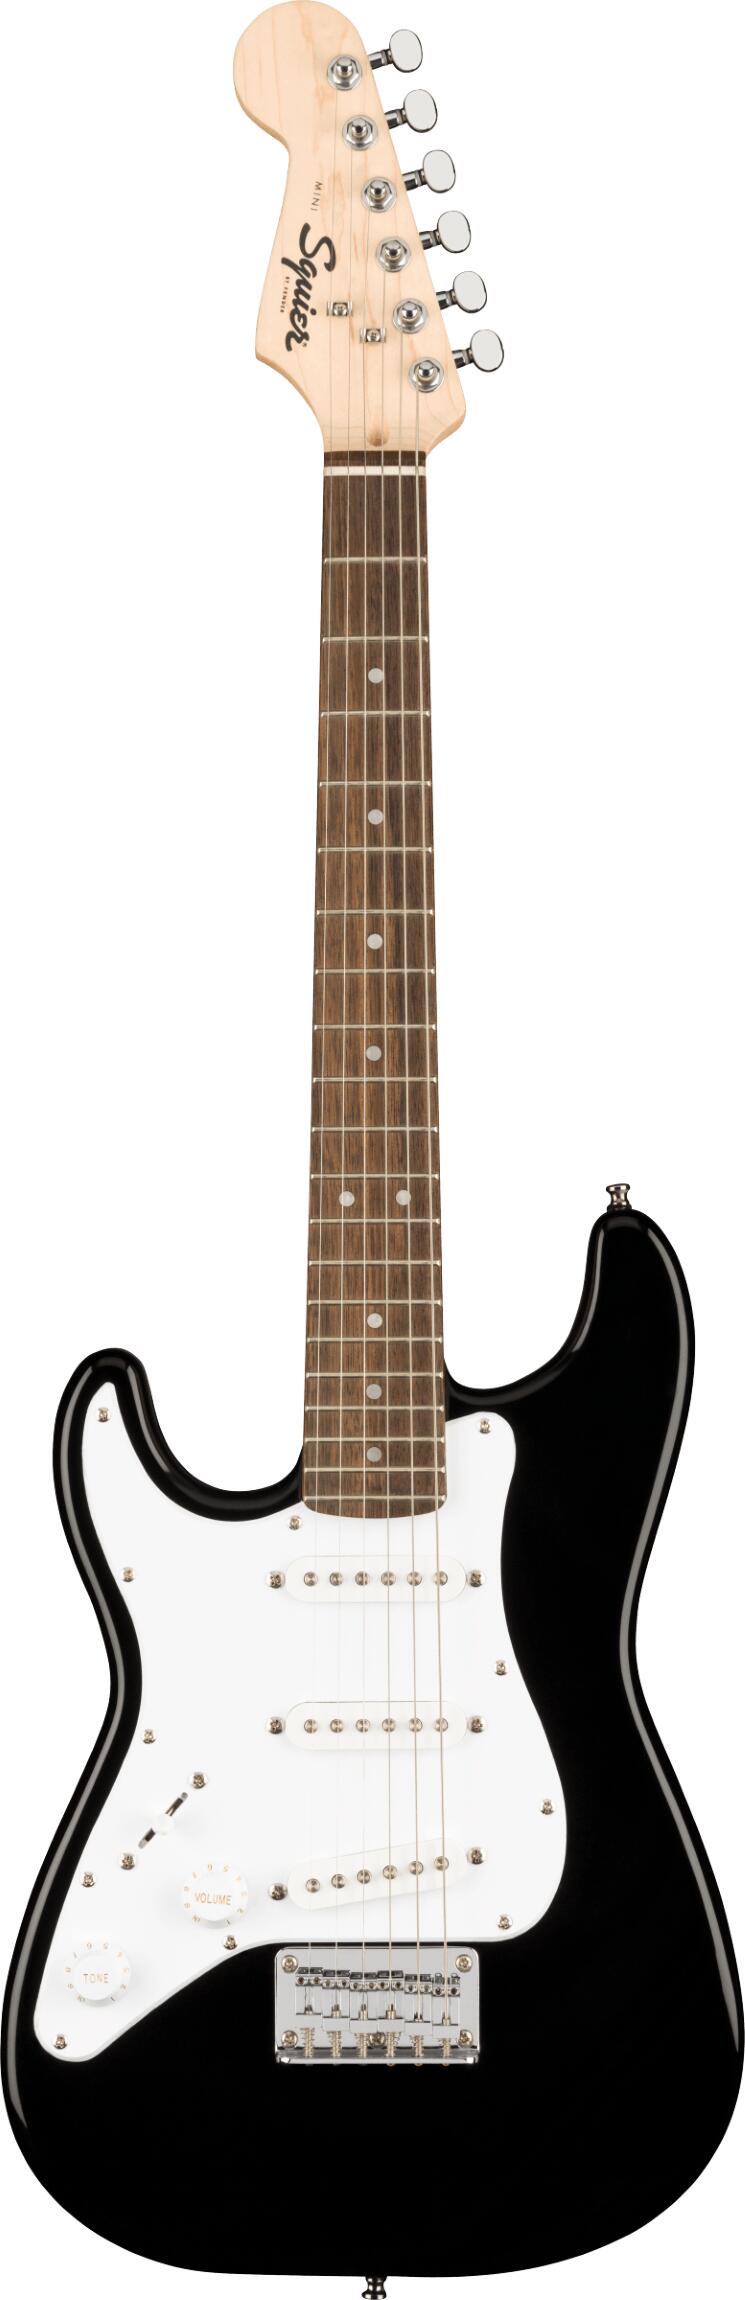 Squier Mini Stratocaster Left-Handed Laurel Fingerboard Black : photo 1